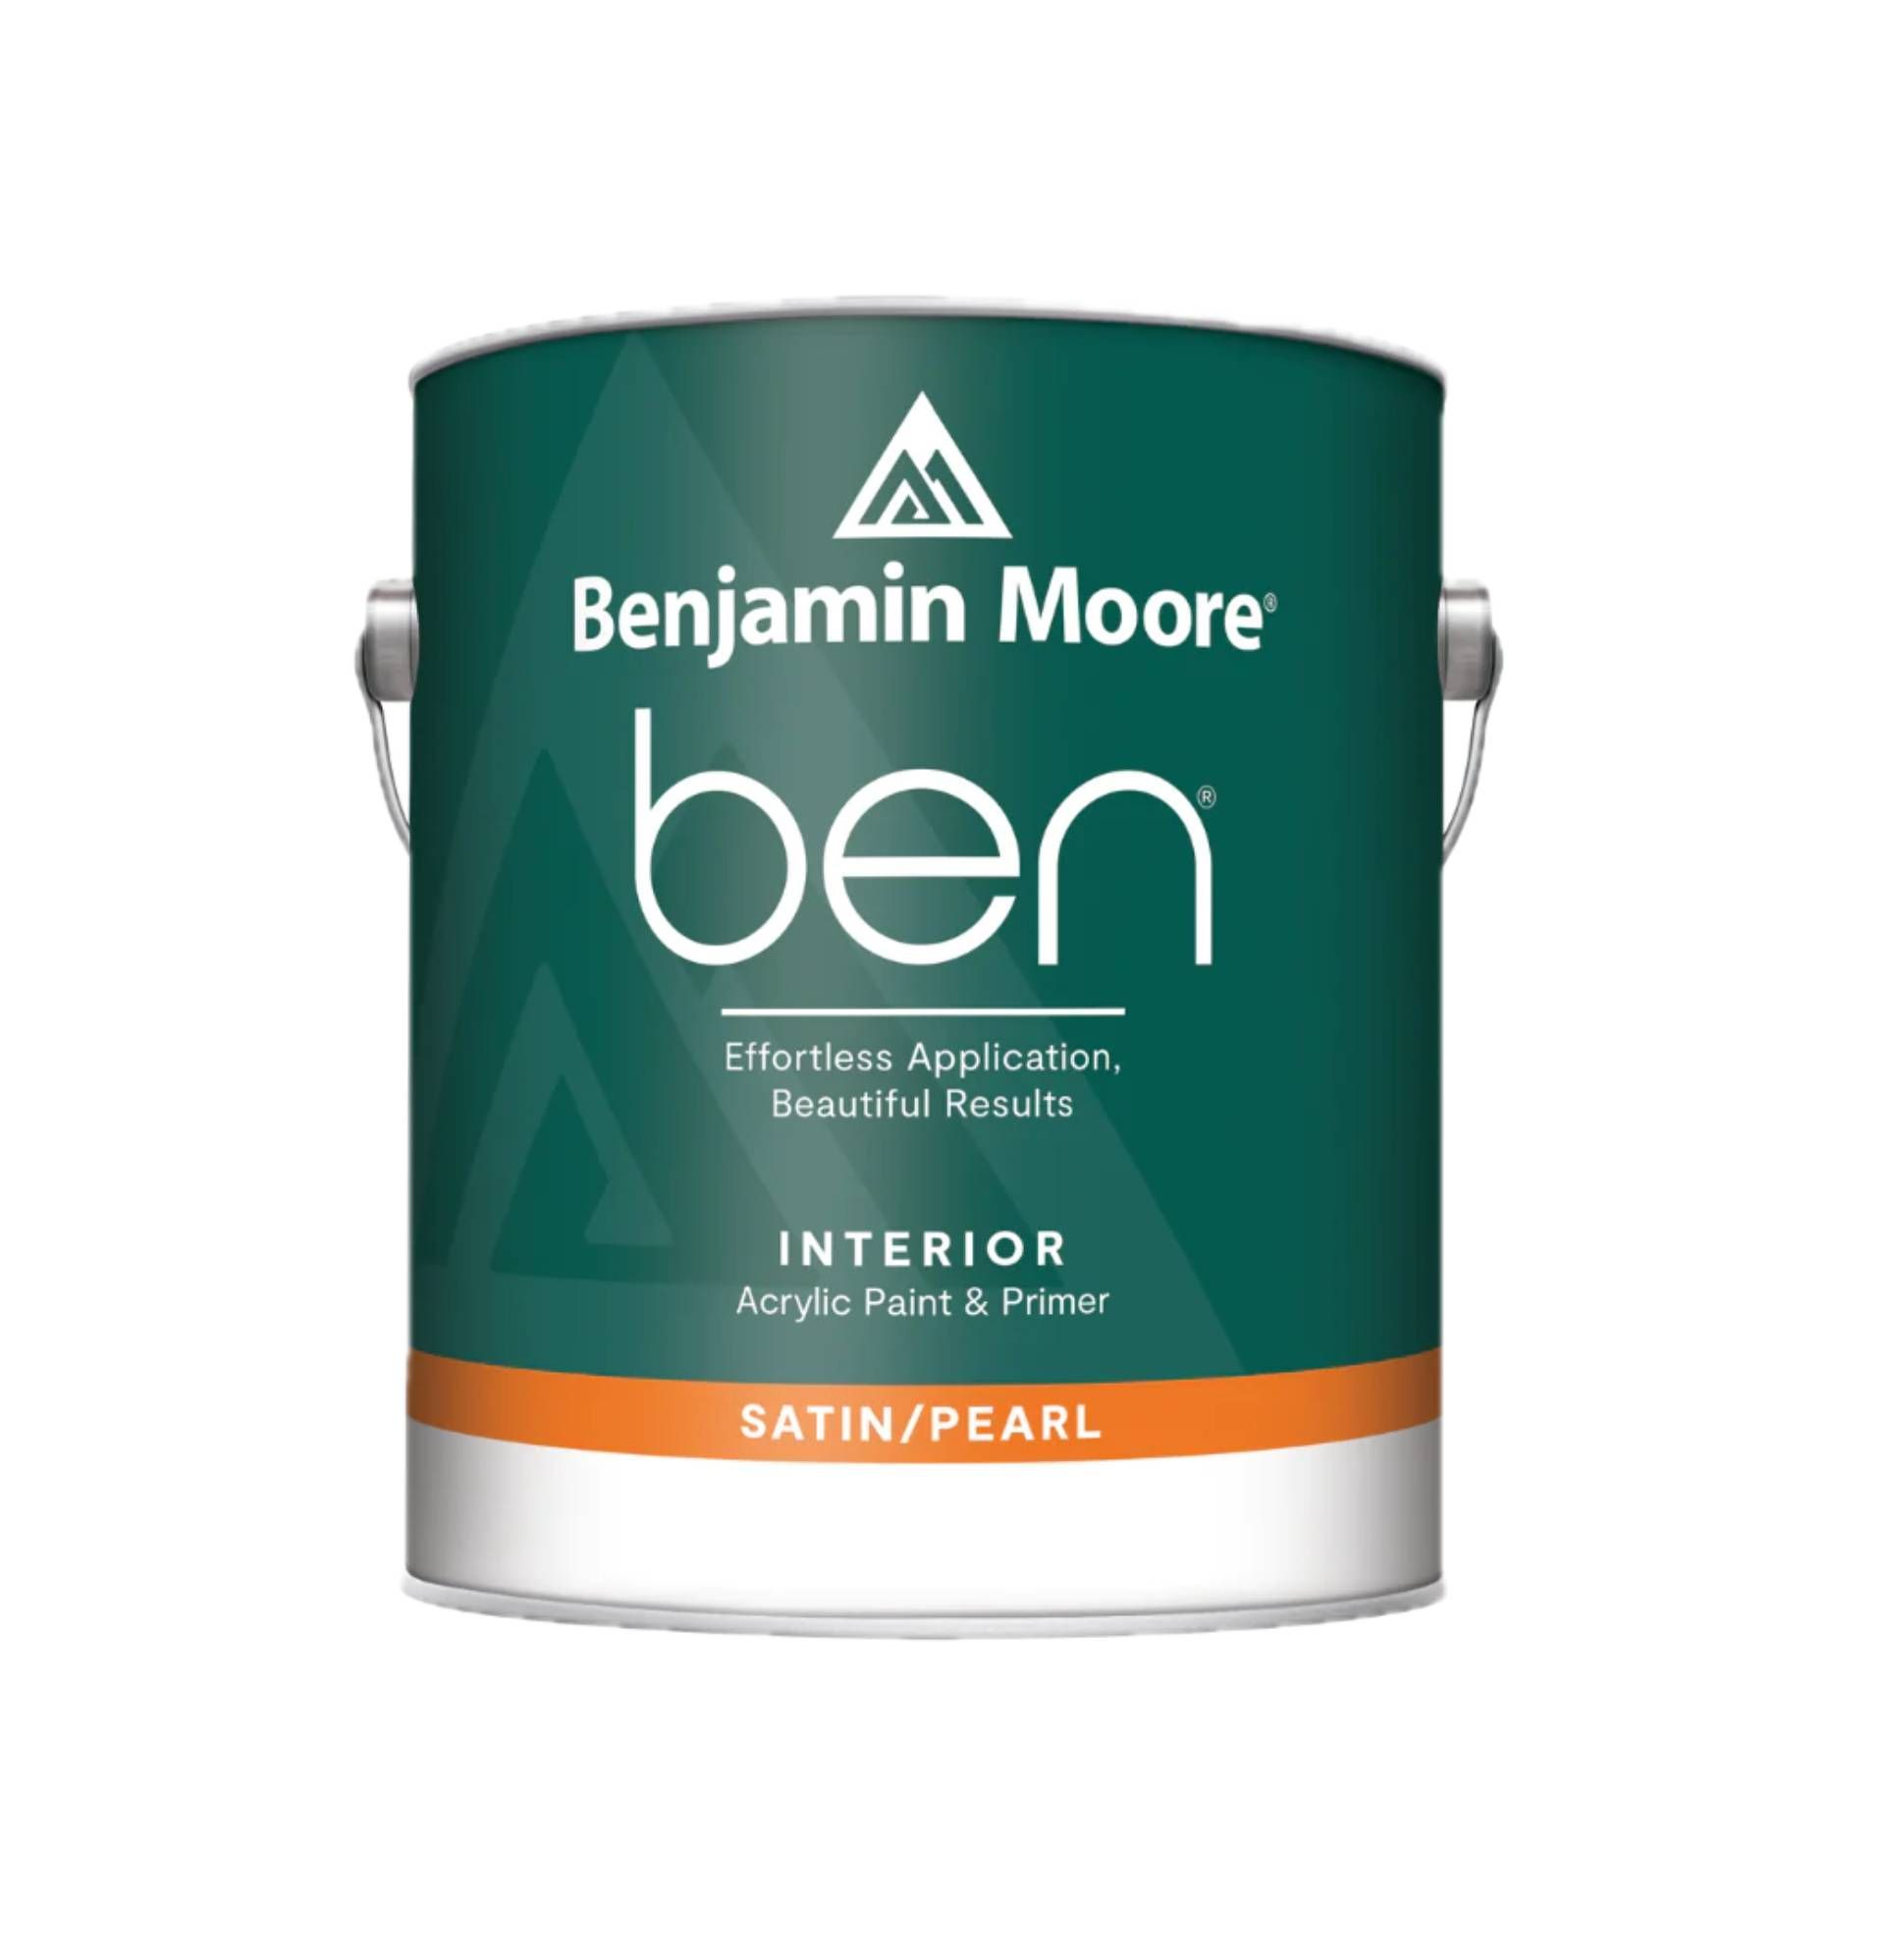 Benjamin Moore ben® Interior Paint near Fort Lauderdale, Florida (FL)